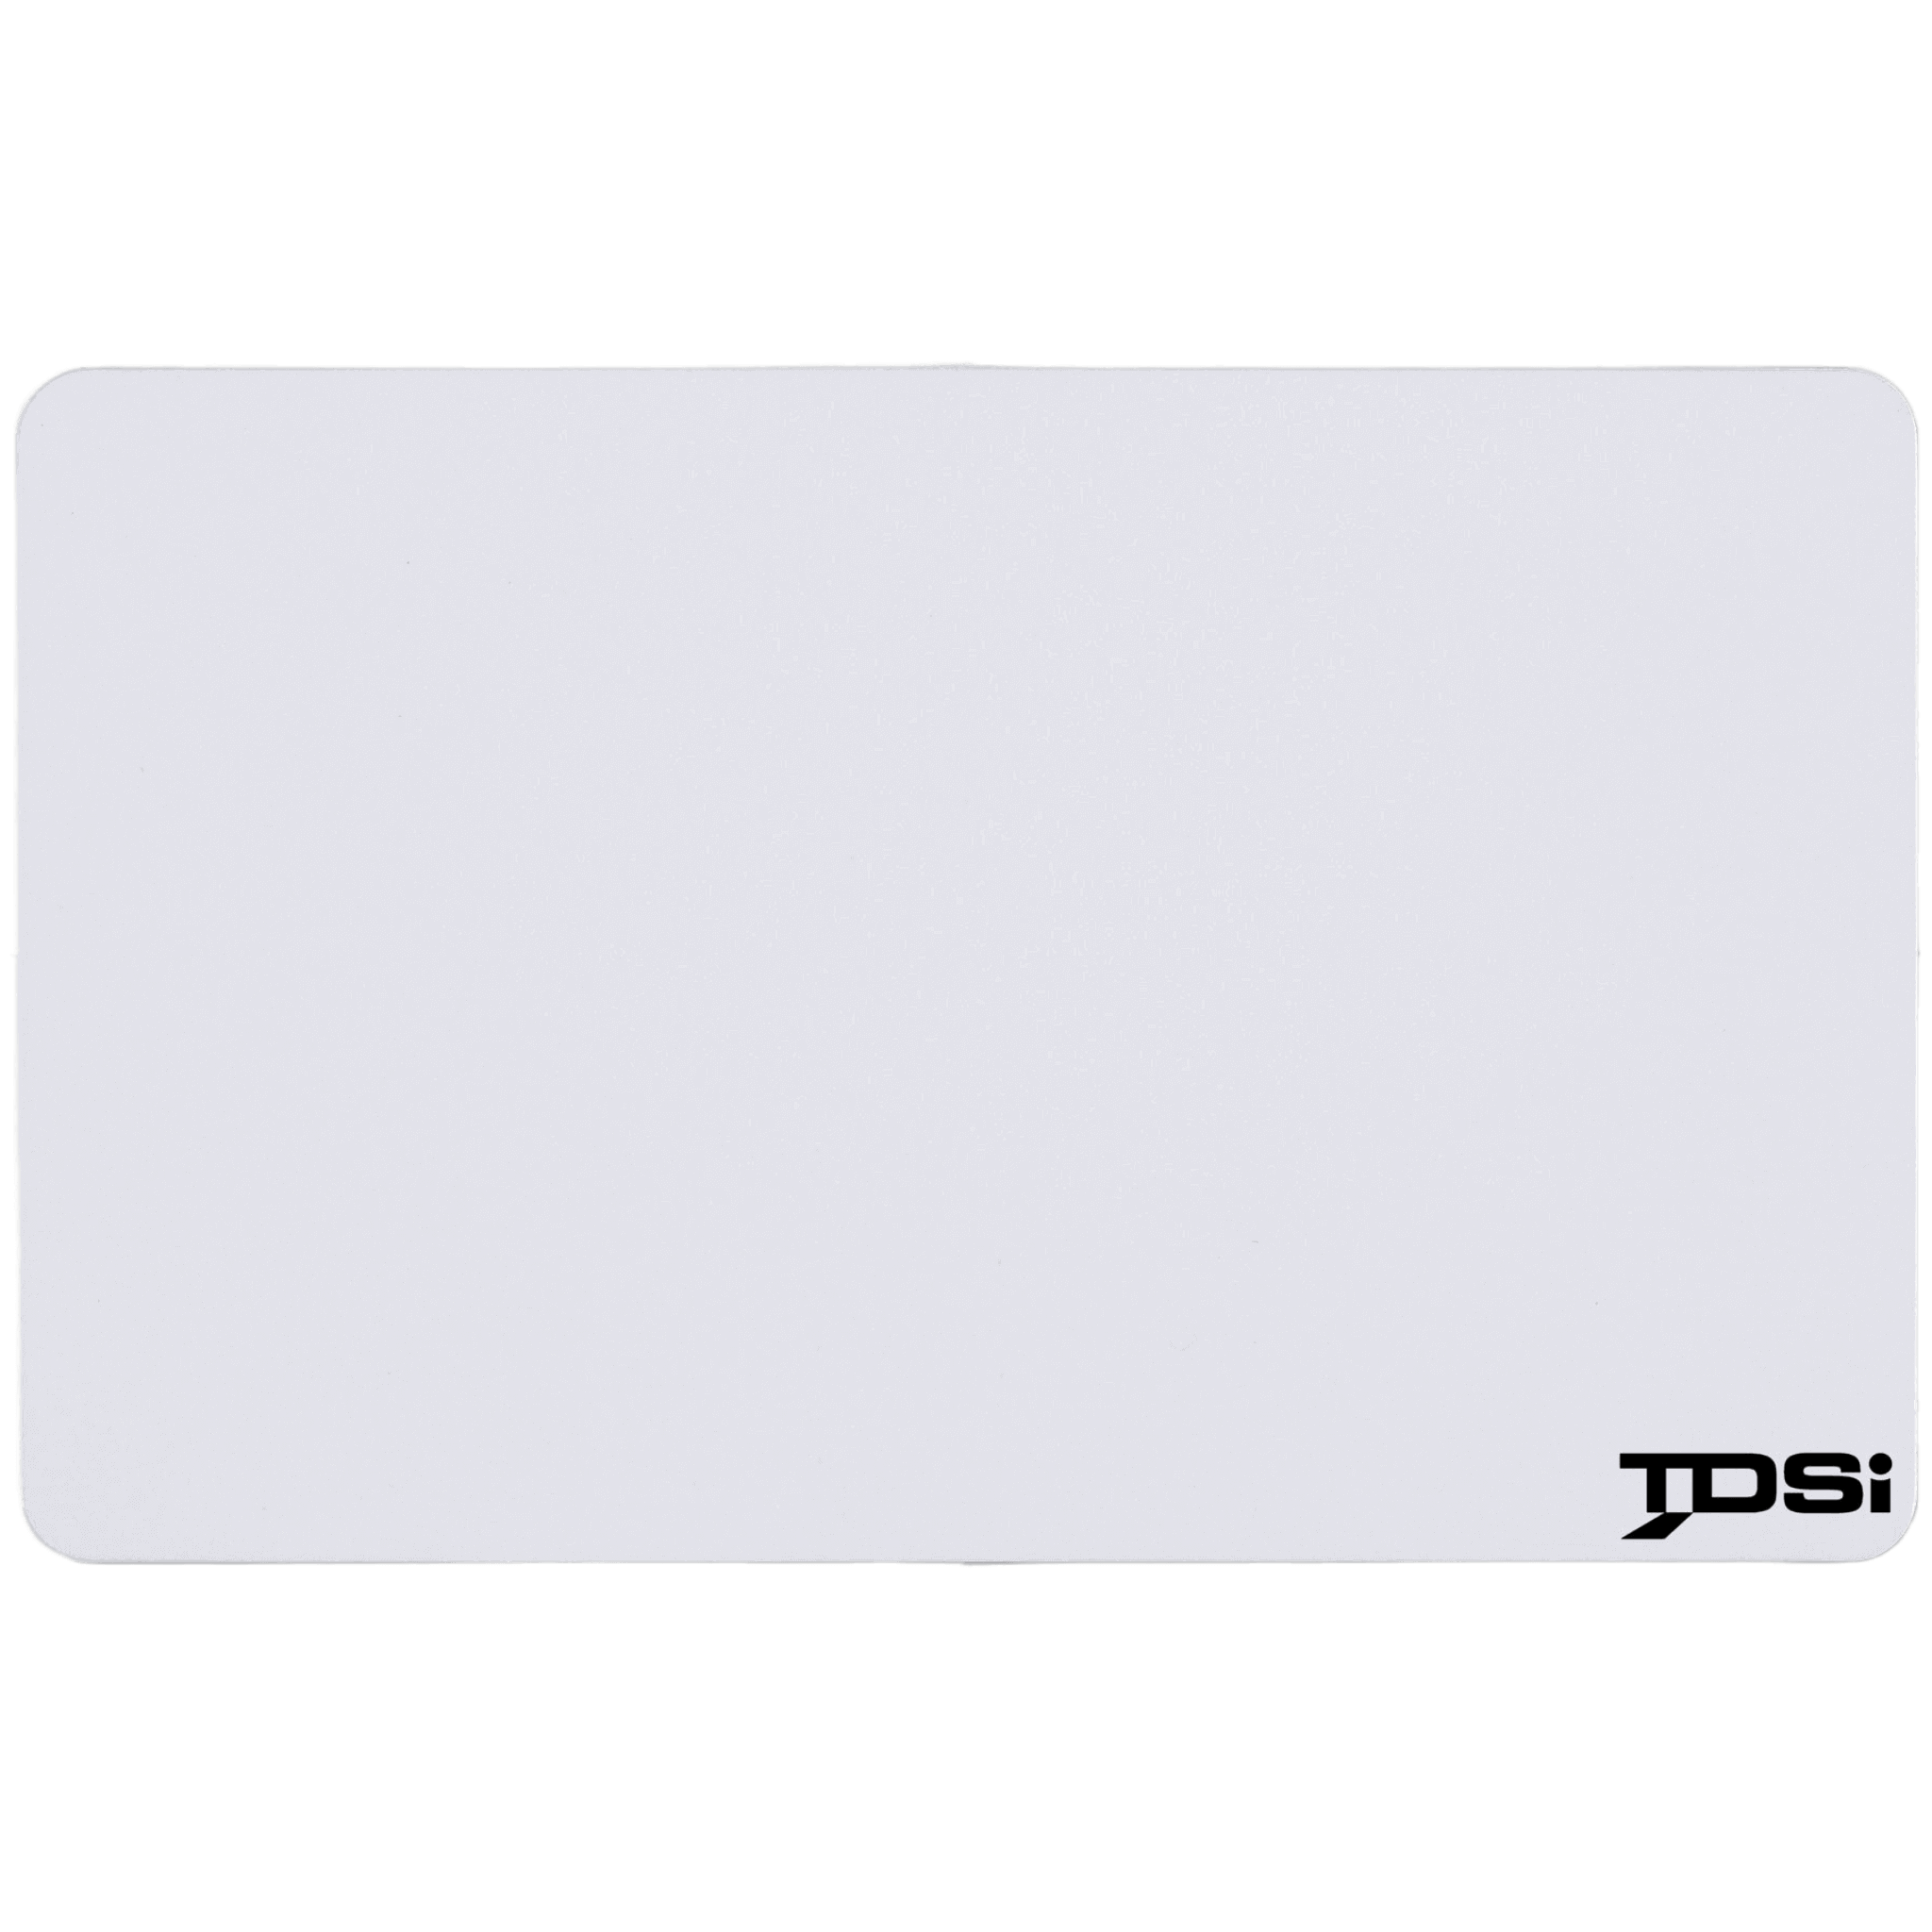 TDSi 4262-0245 Proximity Cards, 100 Pack